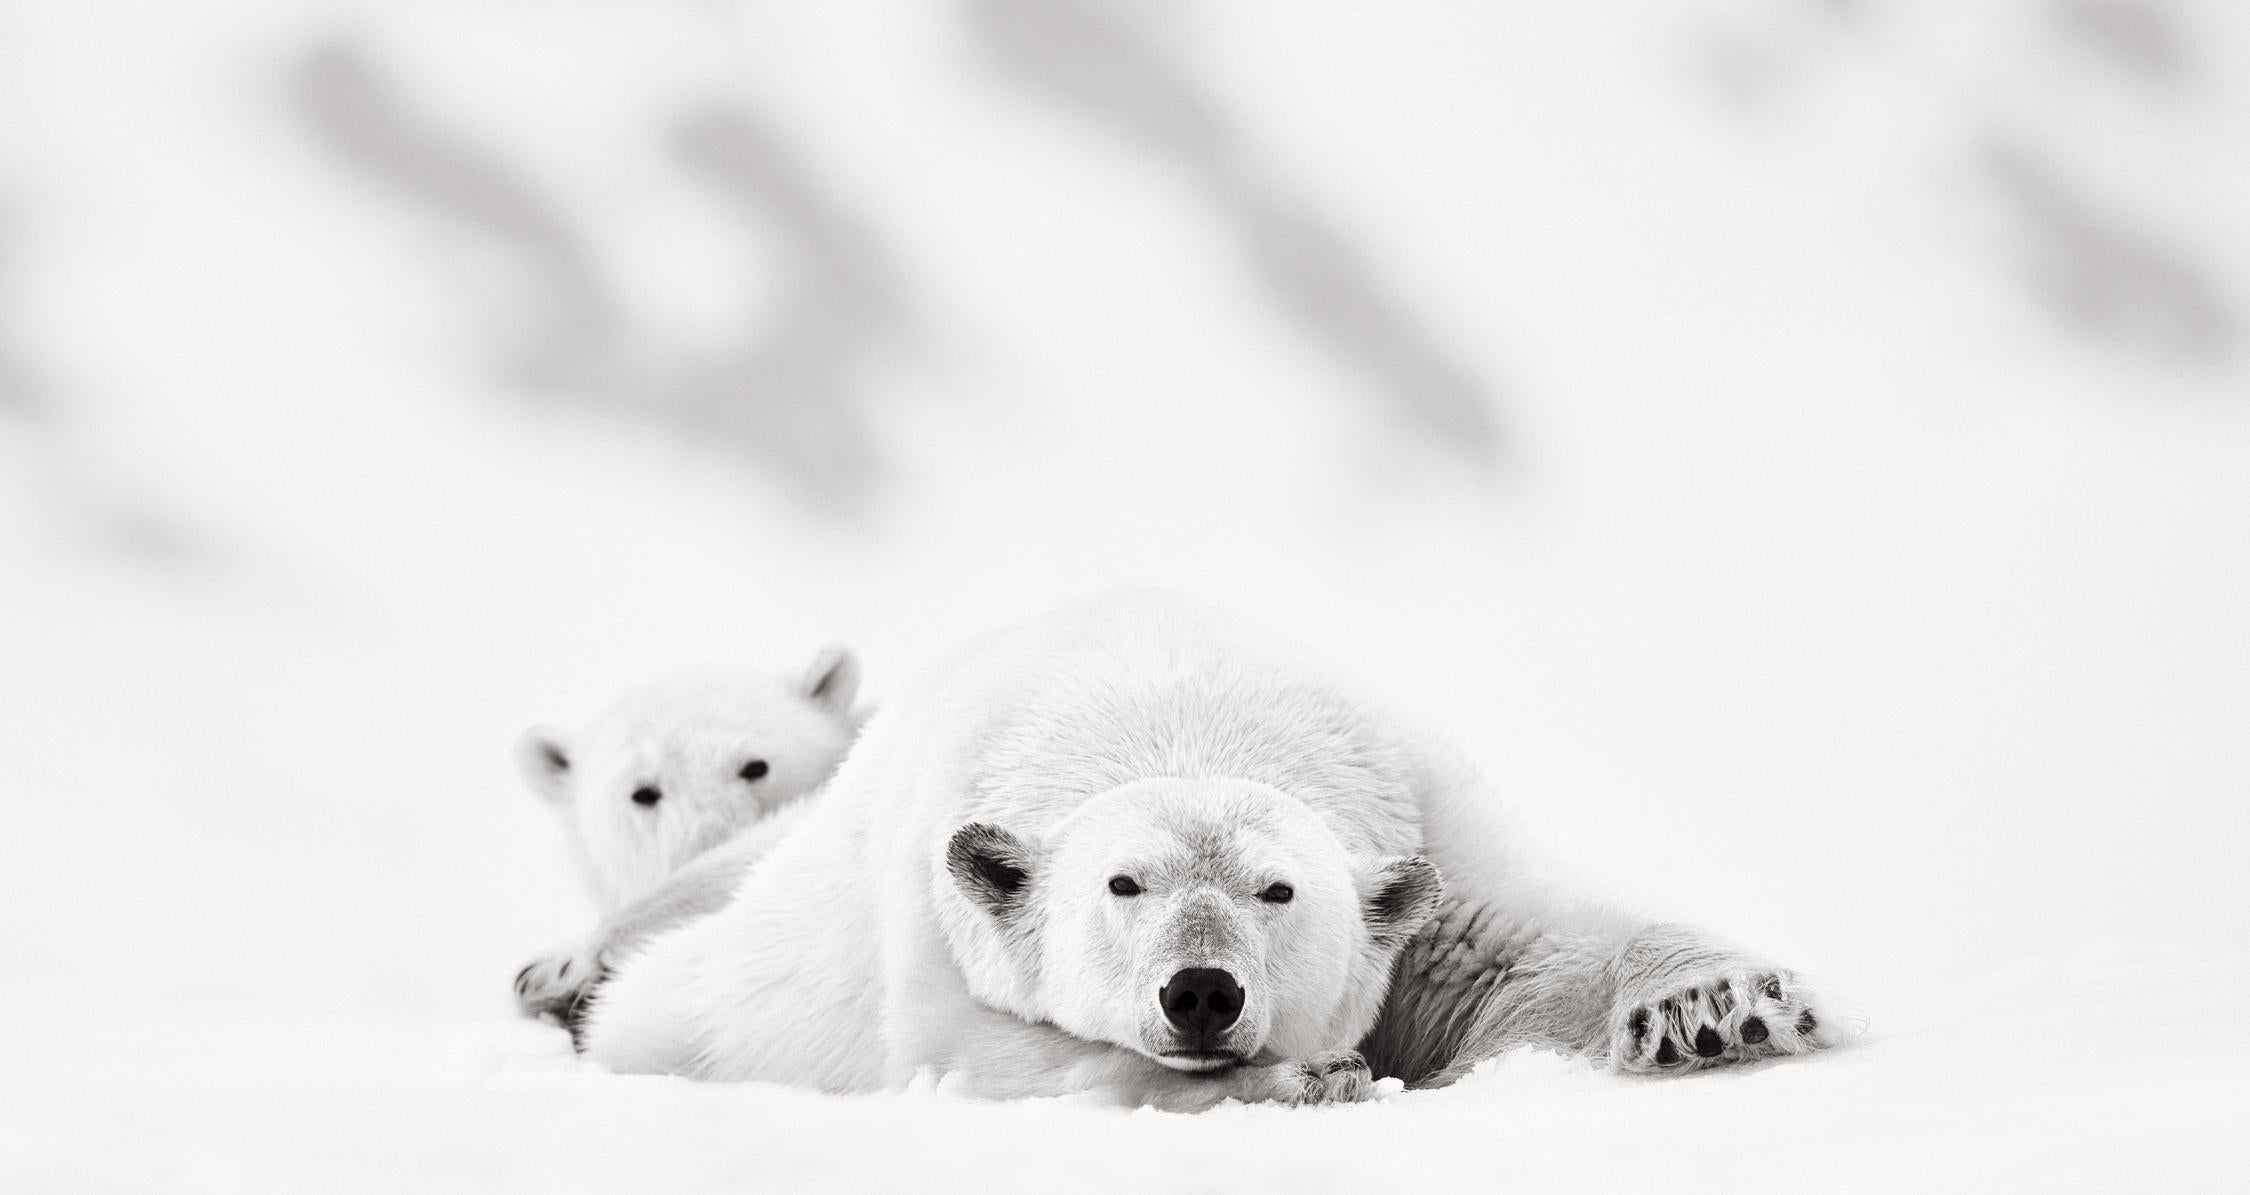 Drew Doggett Black and White Photograph – Mother and Cub Polar Bears Rest, Surreale Schwarz-Weiß-Fotografie, Wildtiere